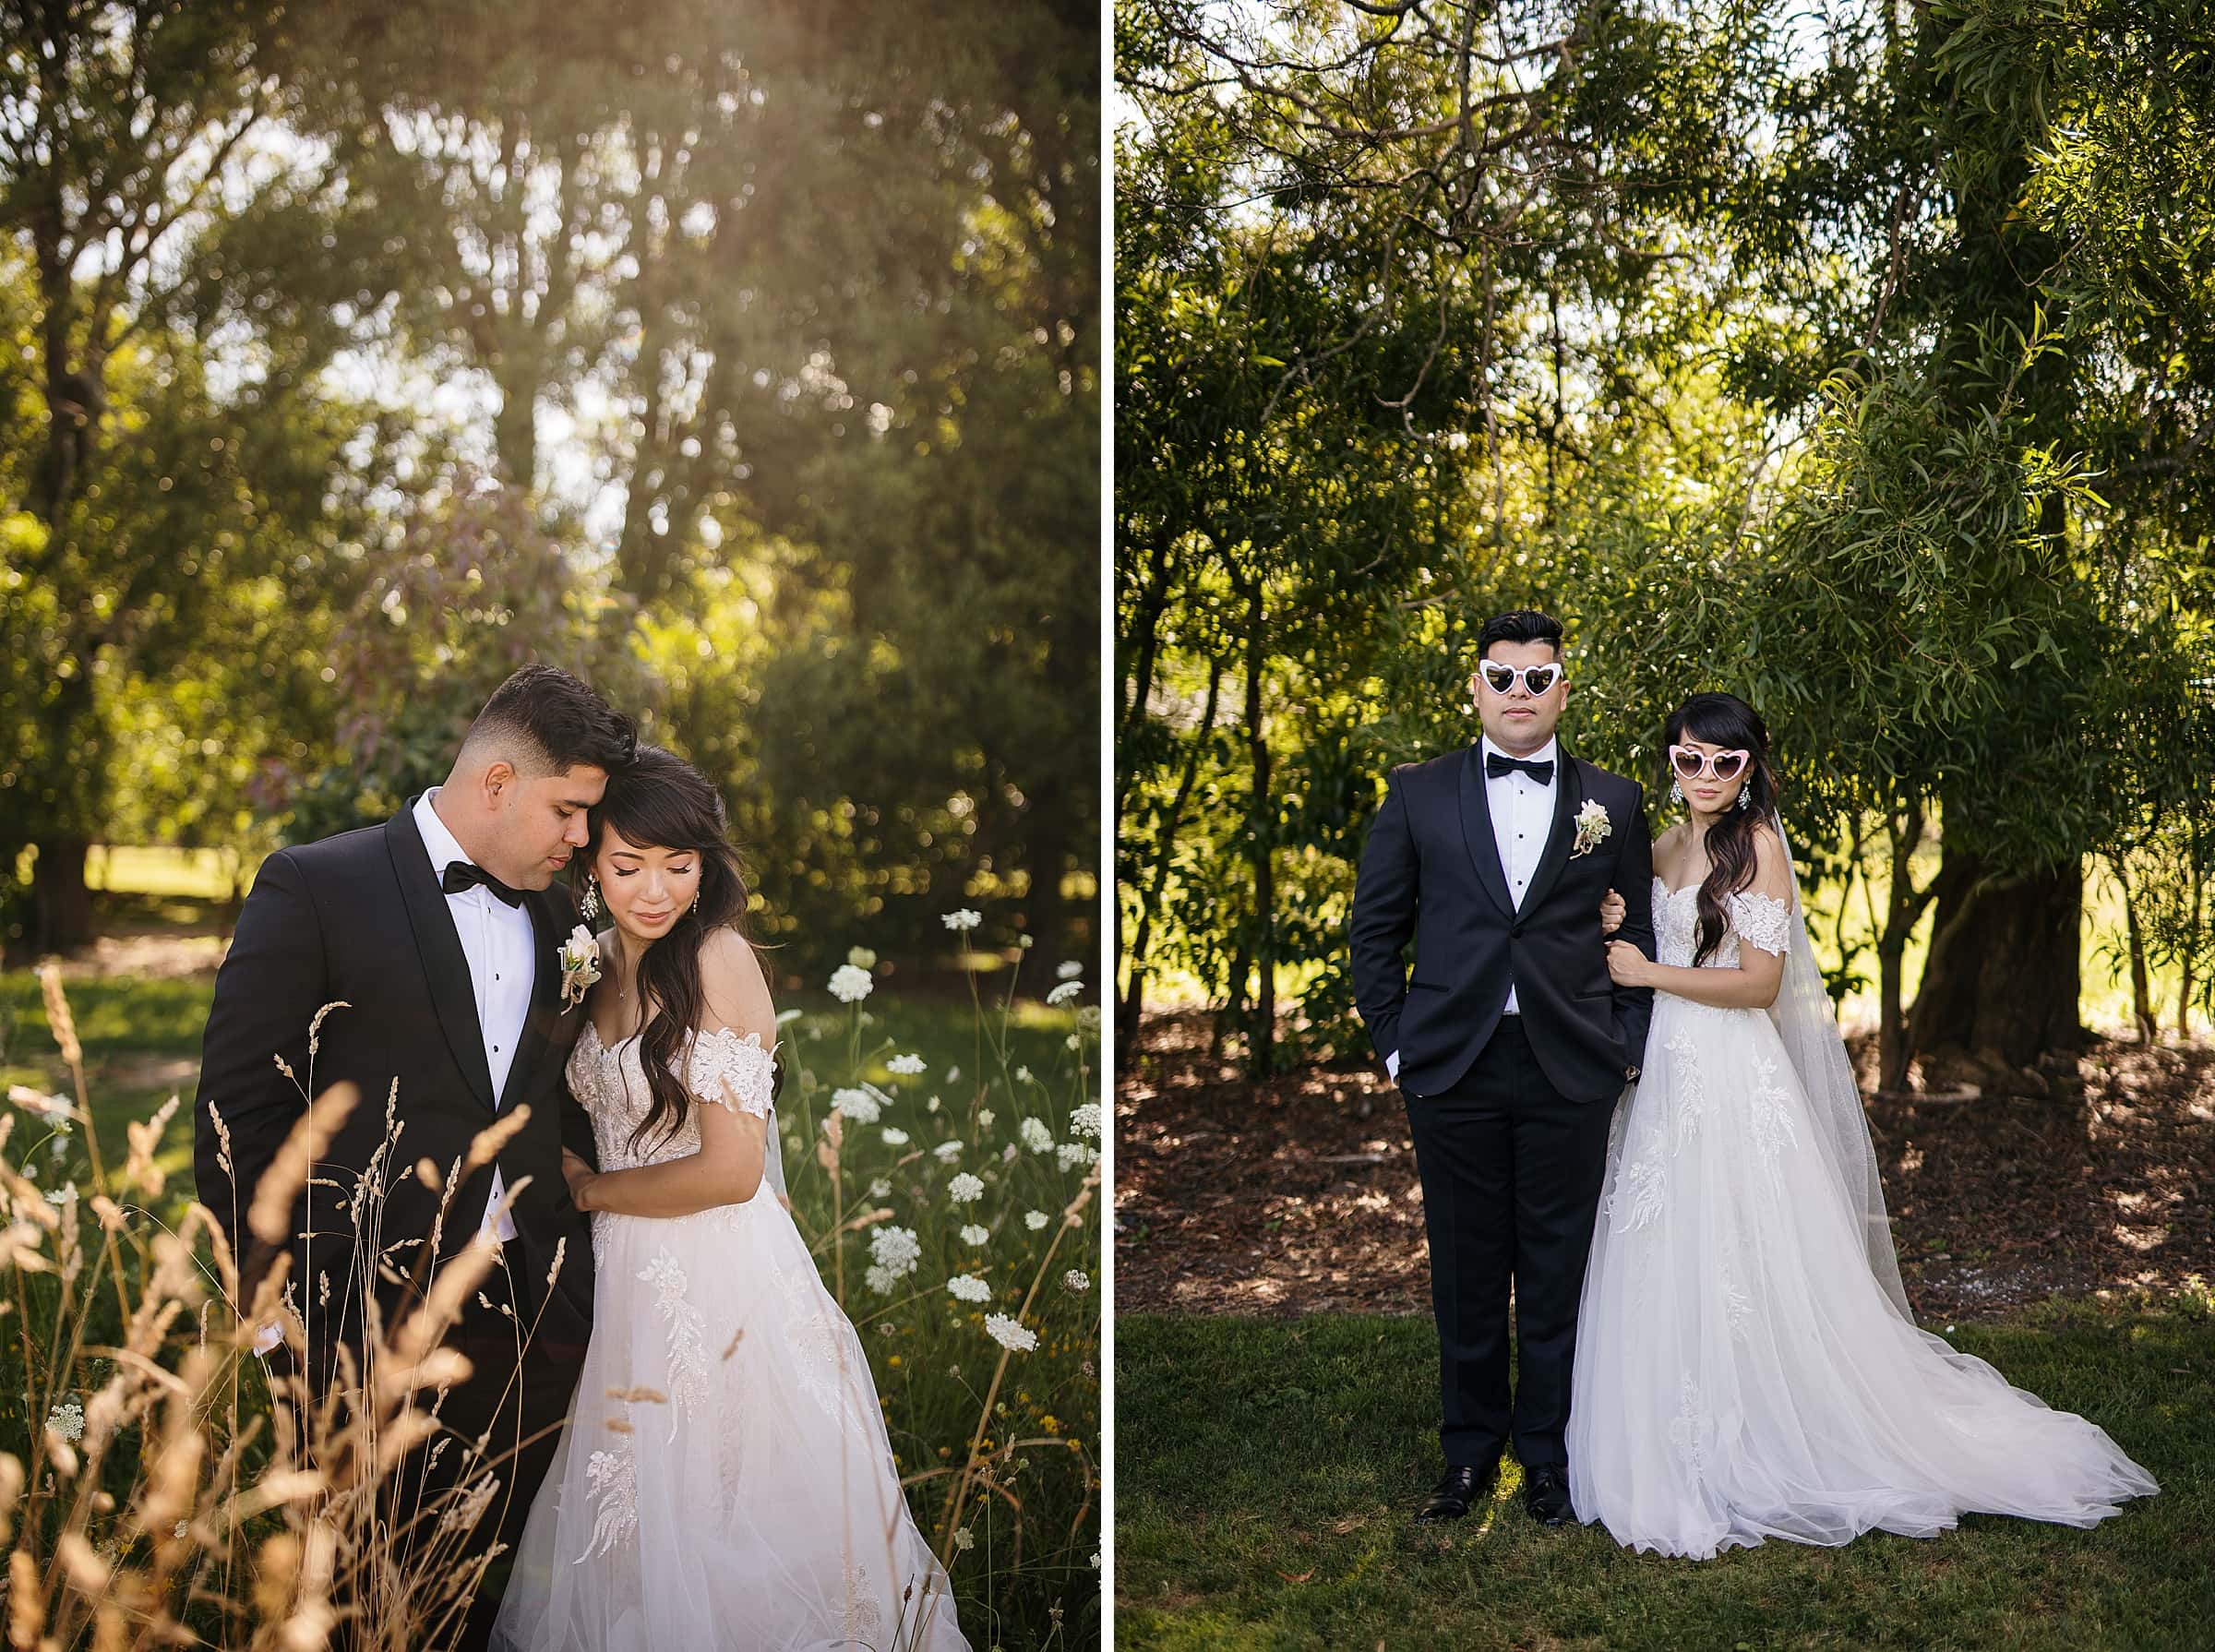 Markovina wedding photos